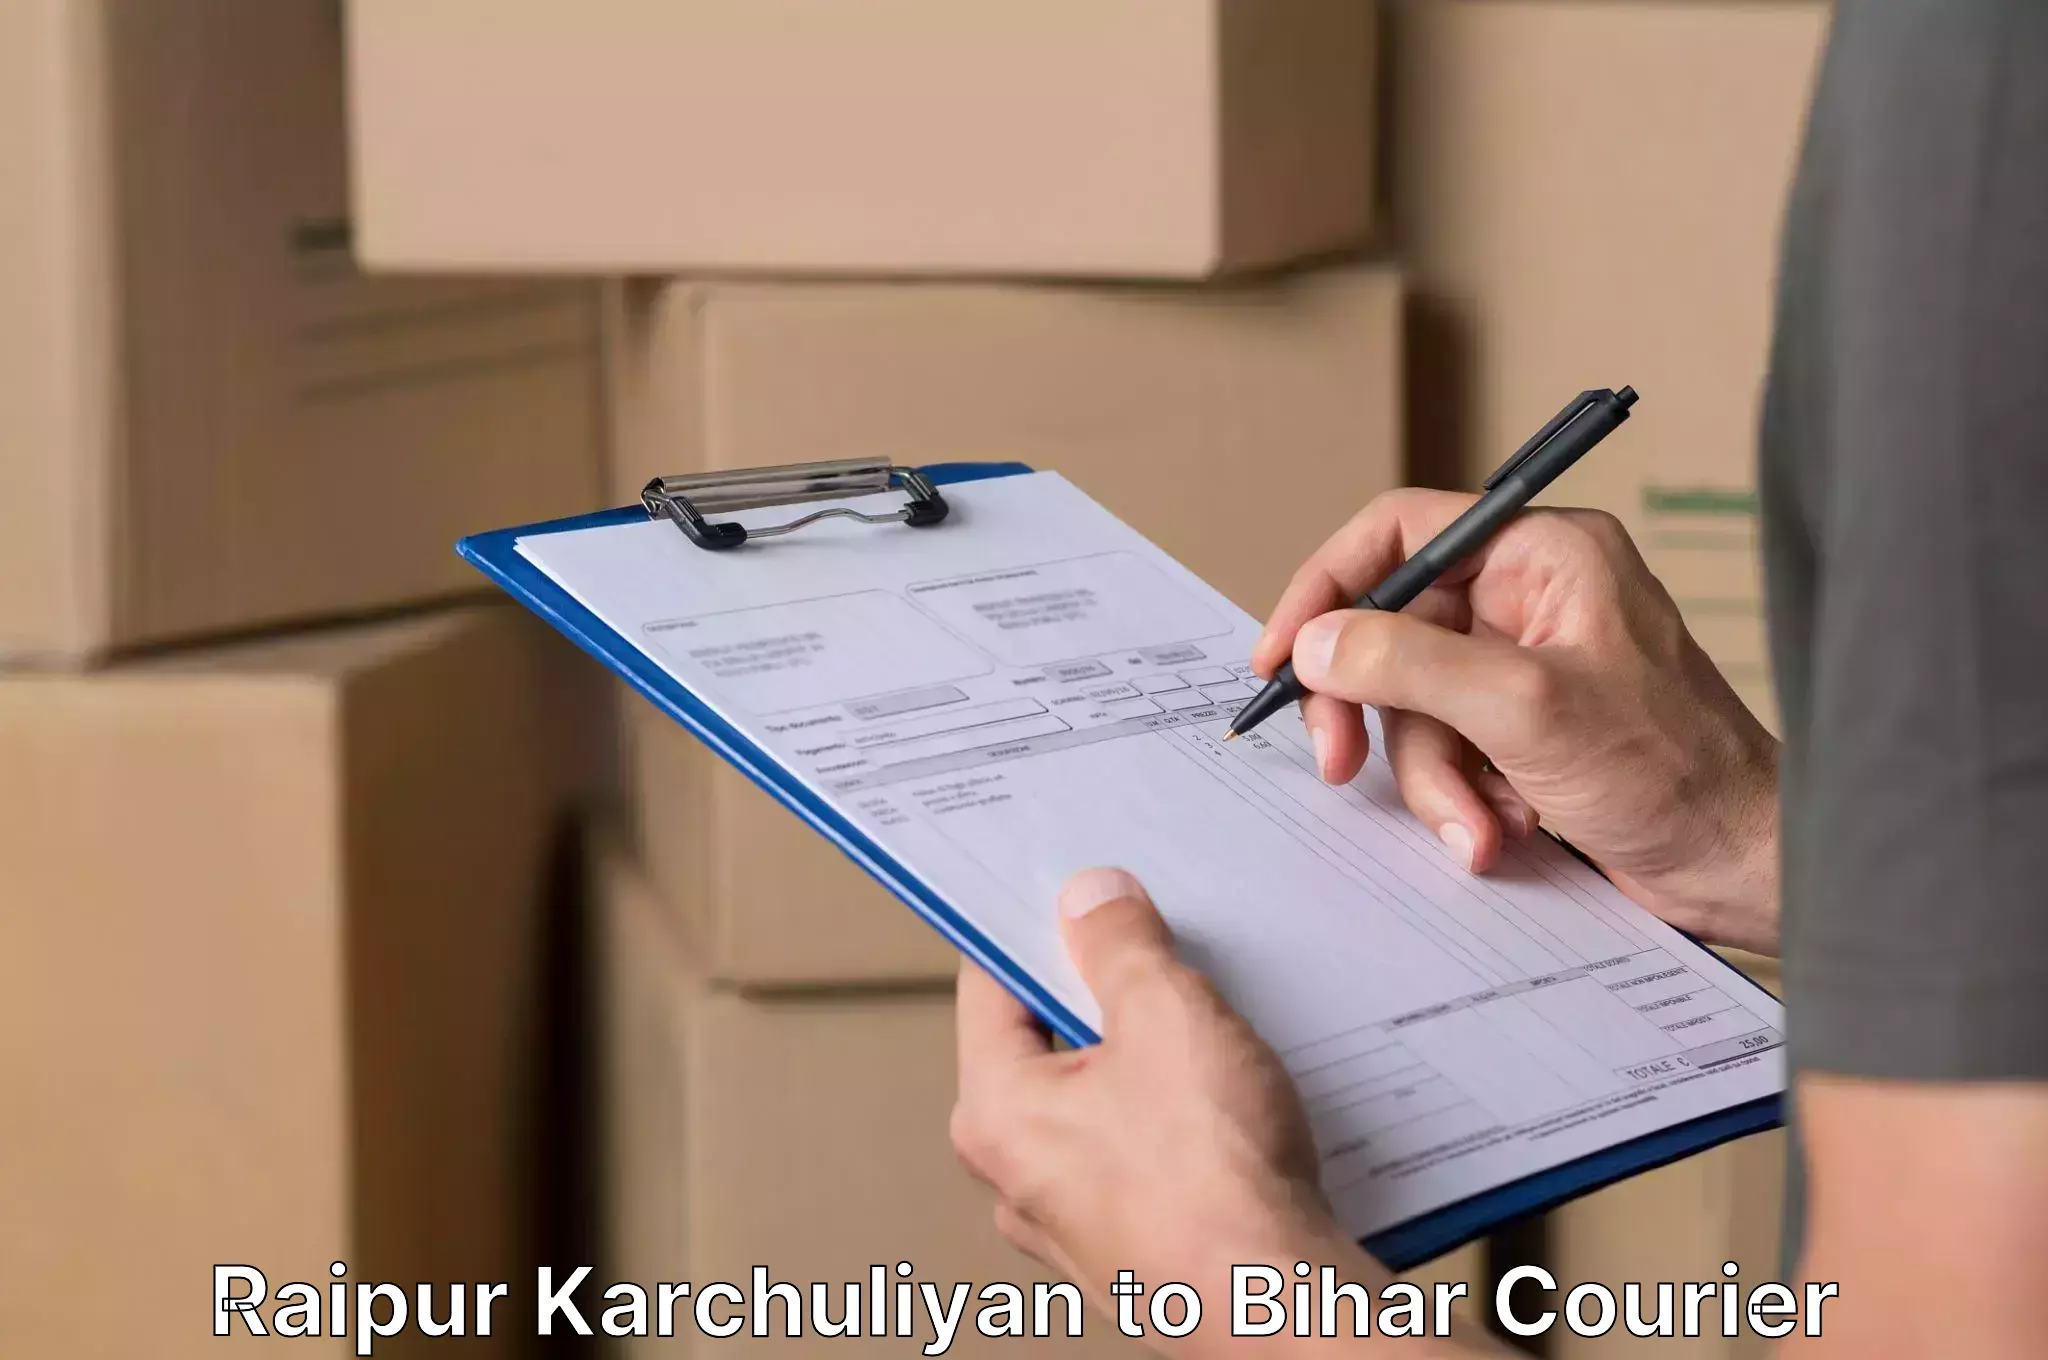 Professional home movers Raipur Karchuliyan to Katoria